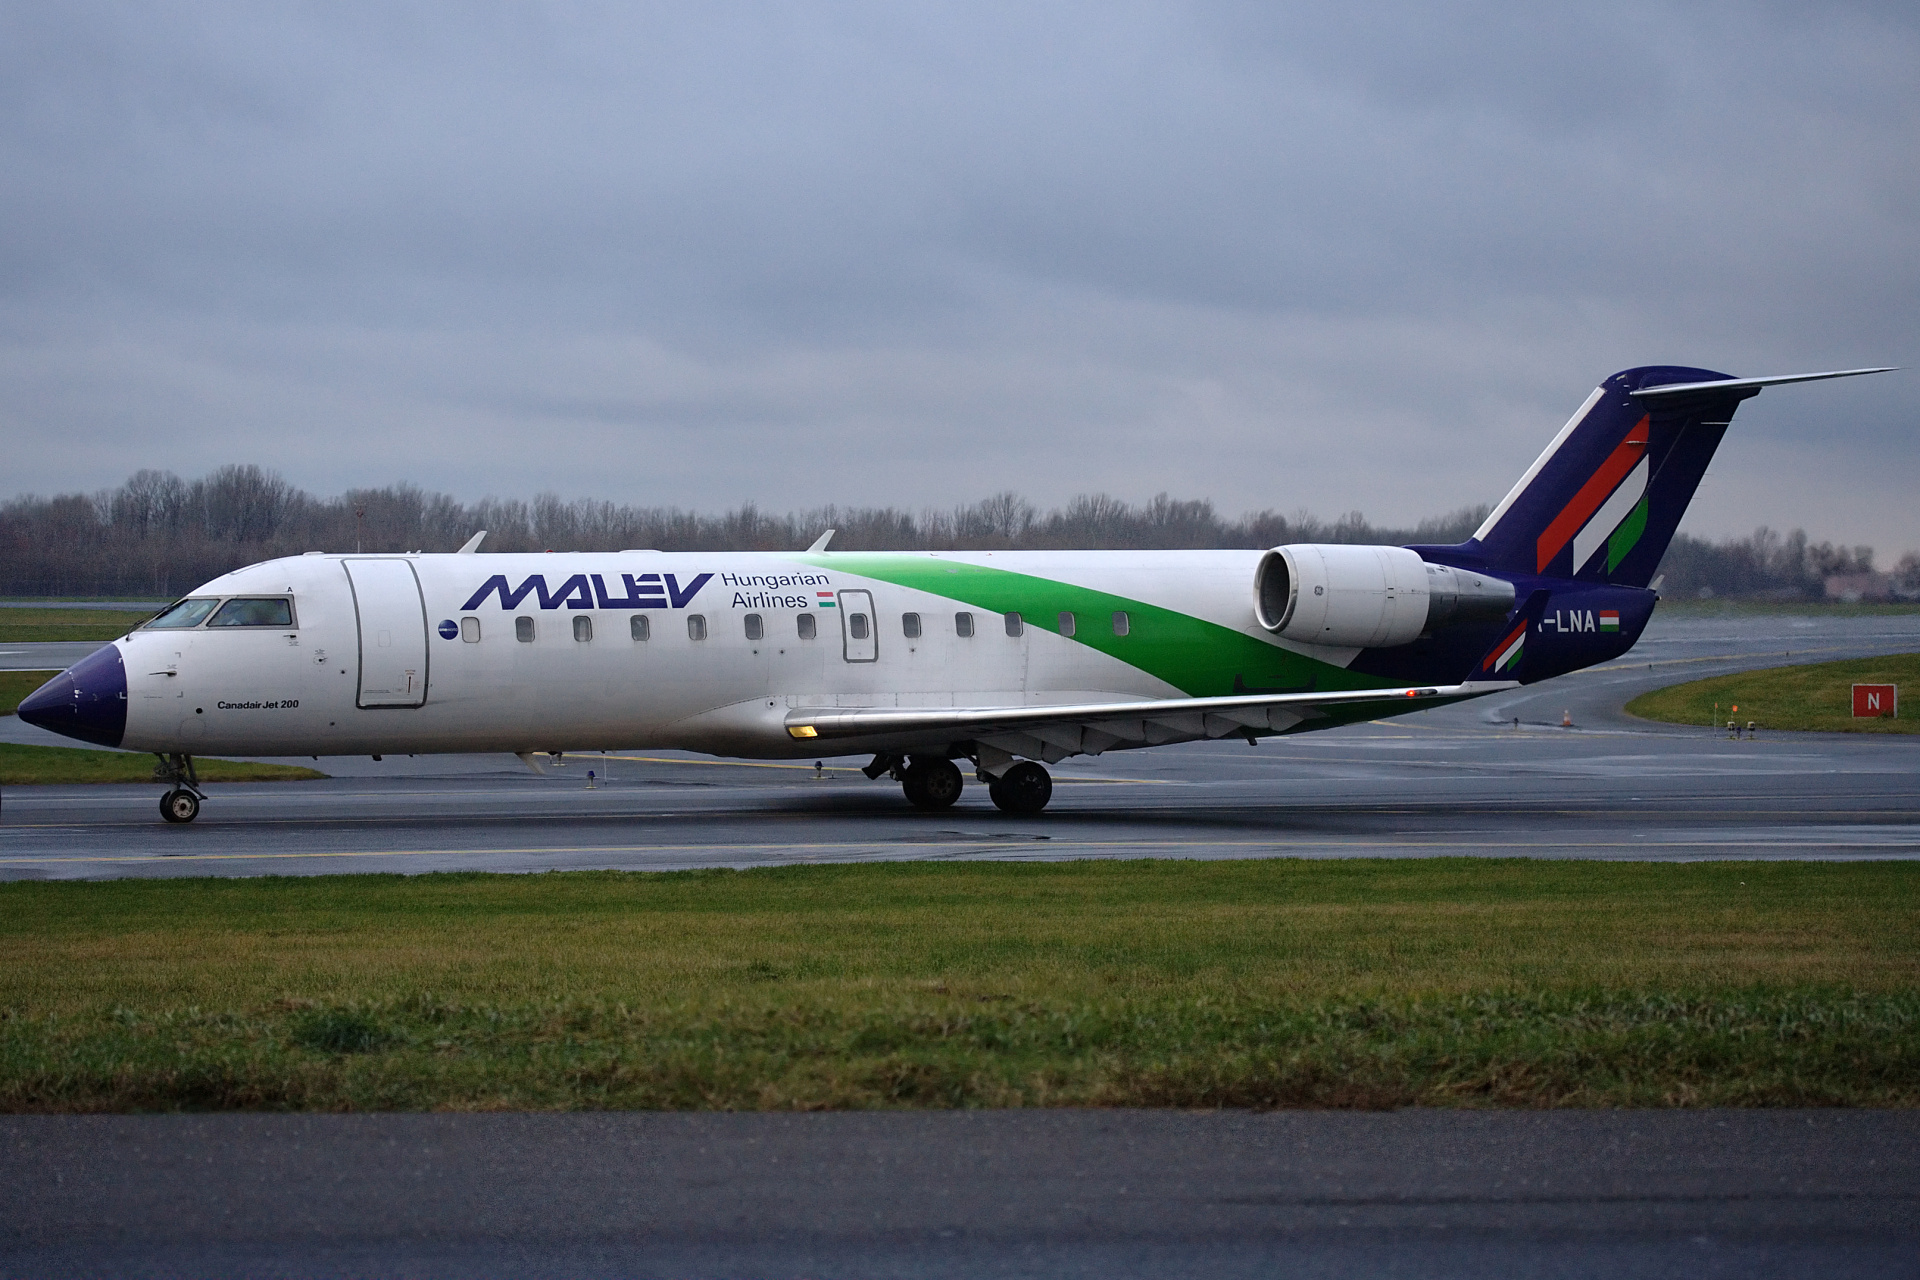 HA-LNA, Malév Hungarian Airlines (Aircraft » EPWA Spotting » Bombardier CL-600 Regional Jet » CRJ-200)